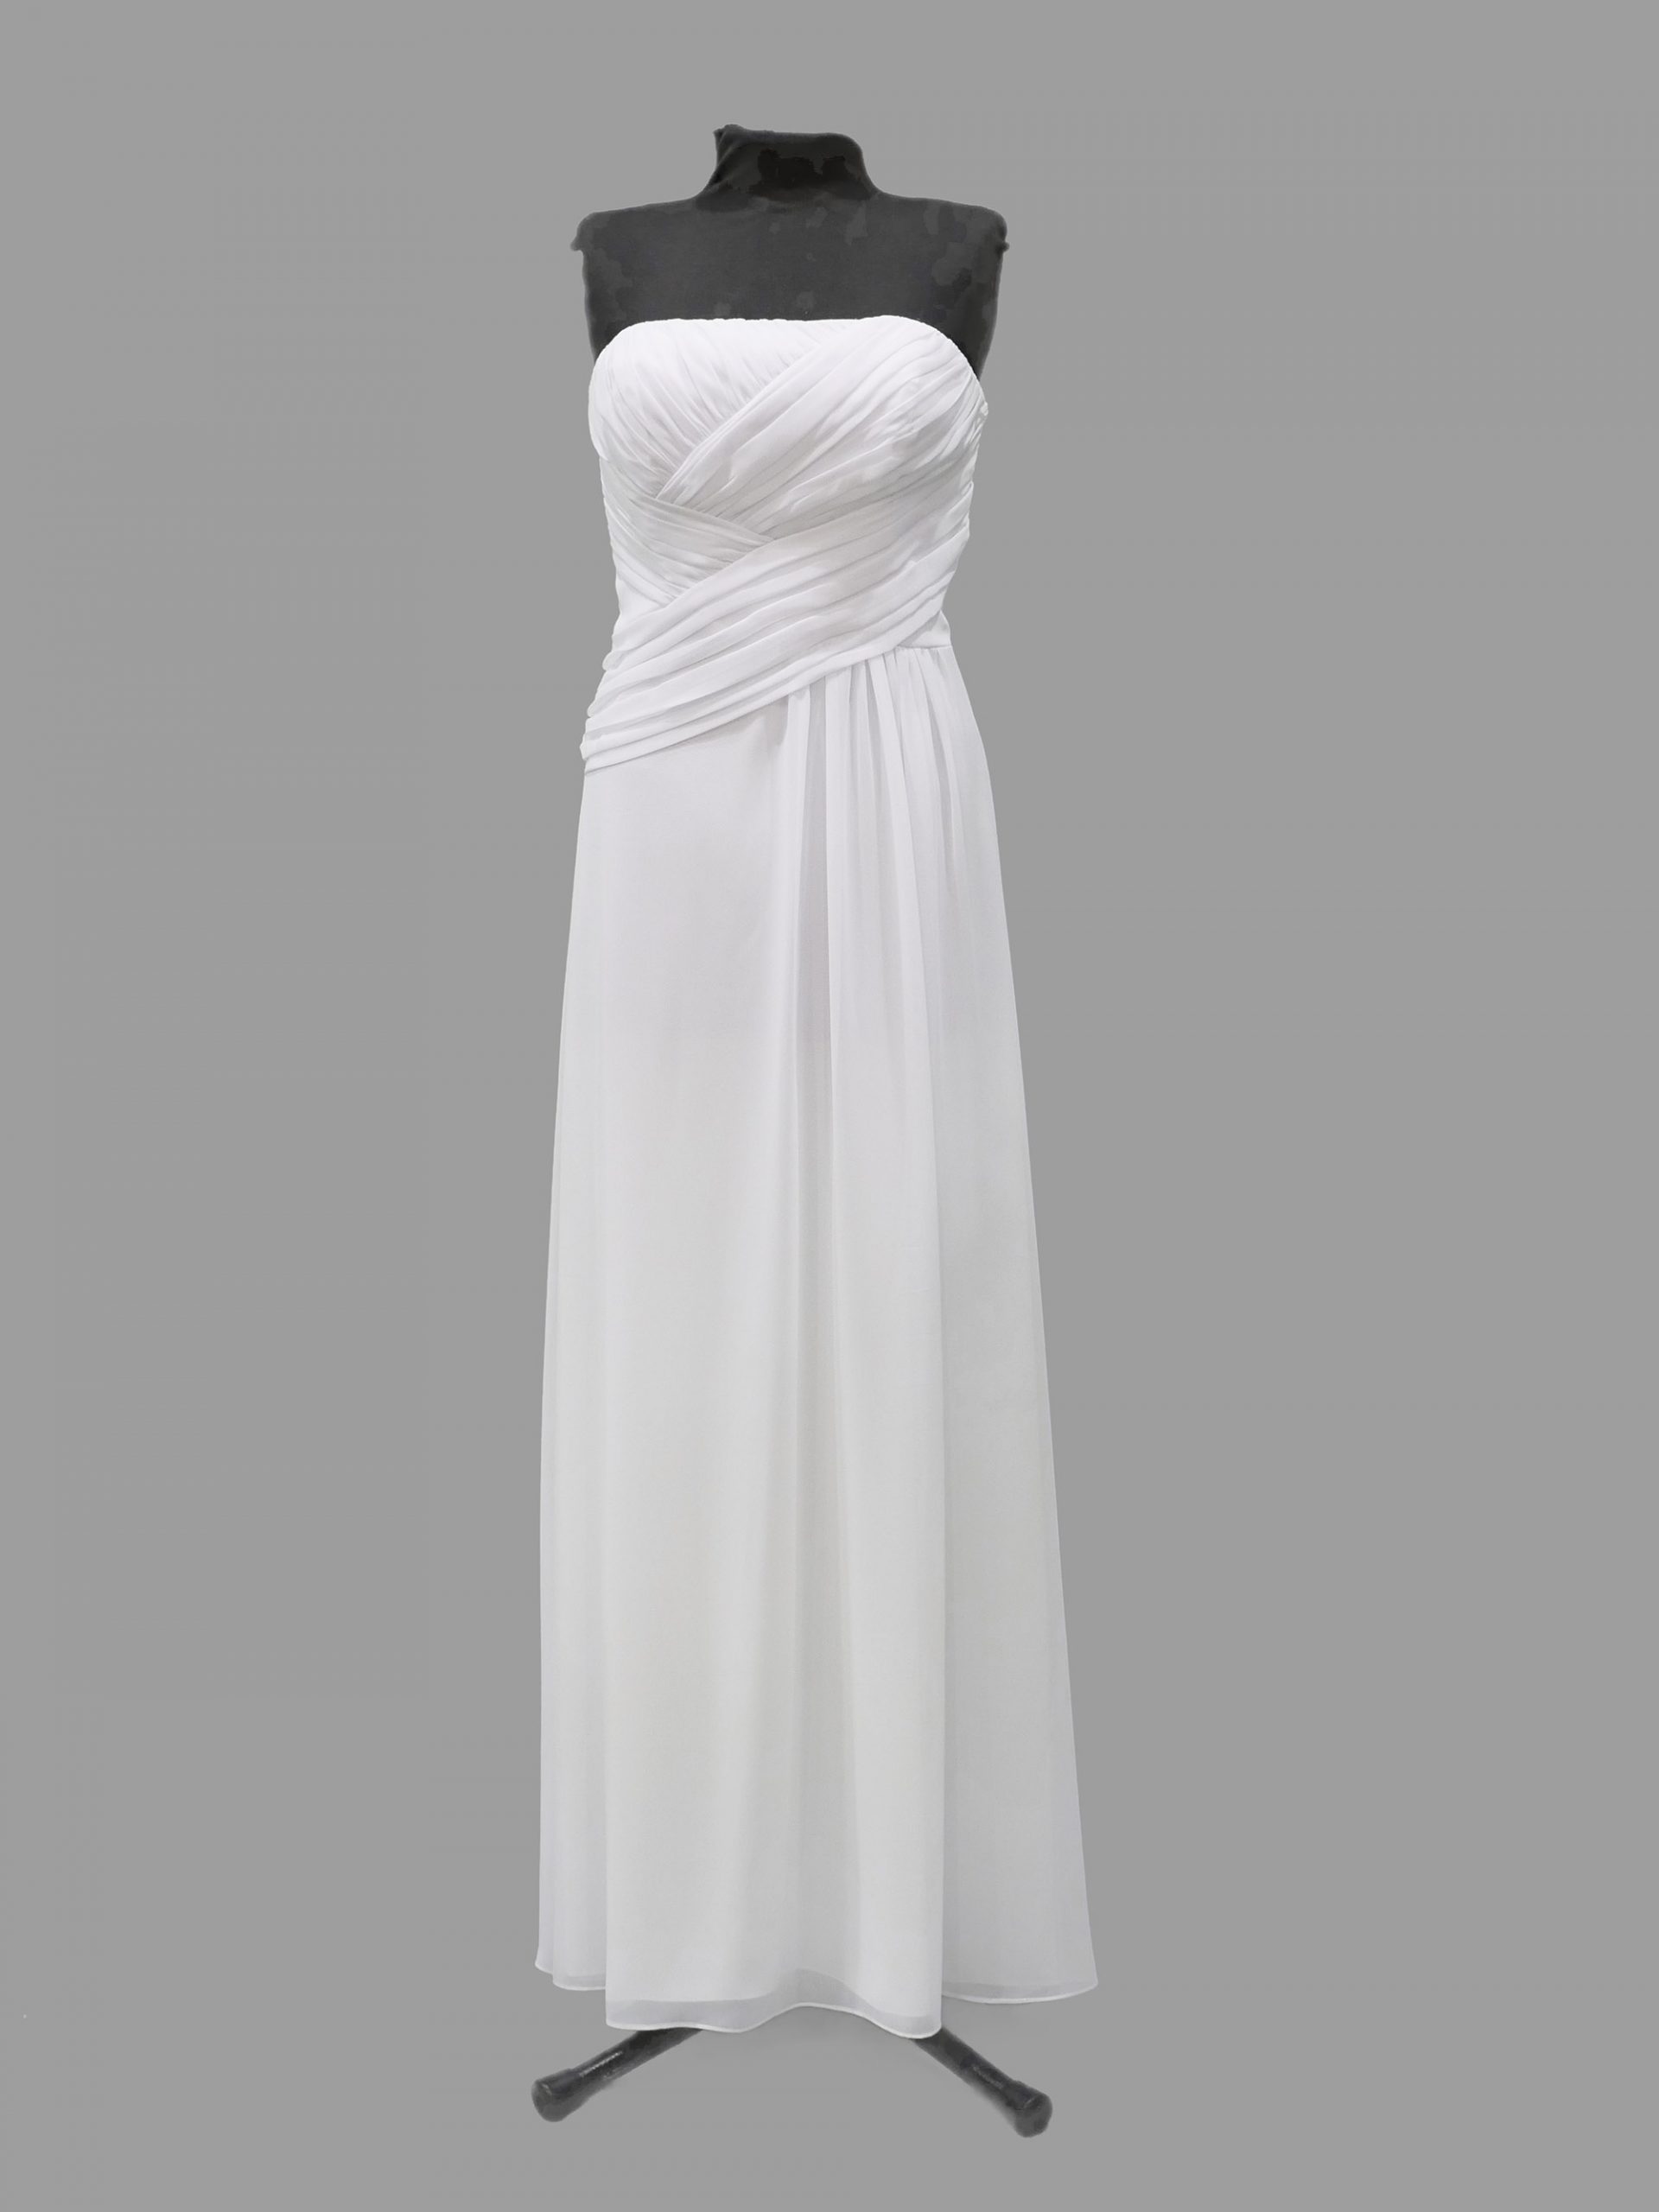 Simple Bridal or Debutante Gown, Australian Made, Mr K, KB4984, size 12